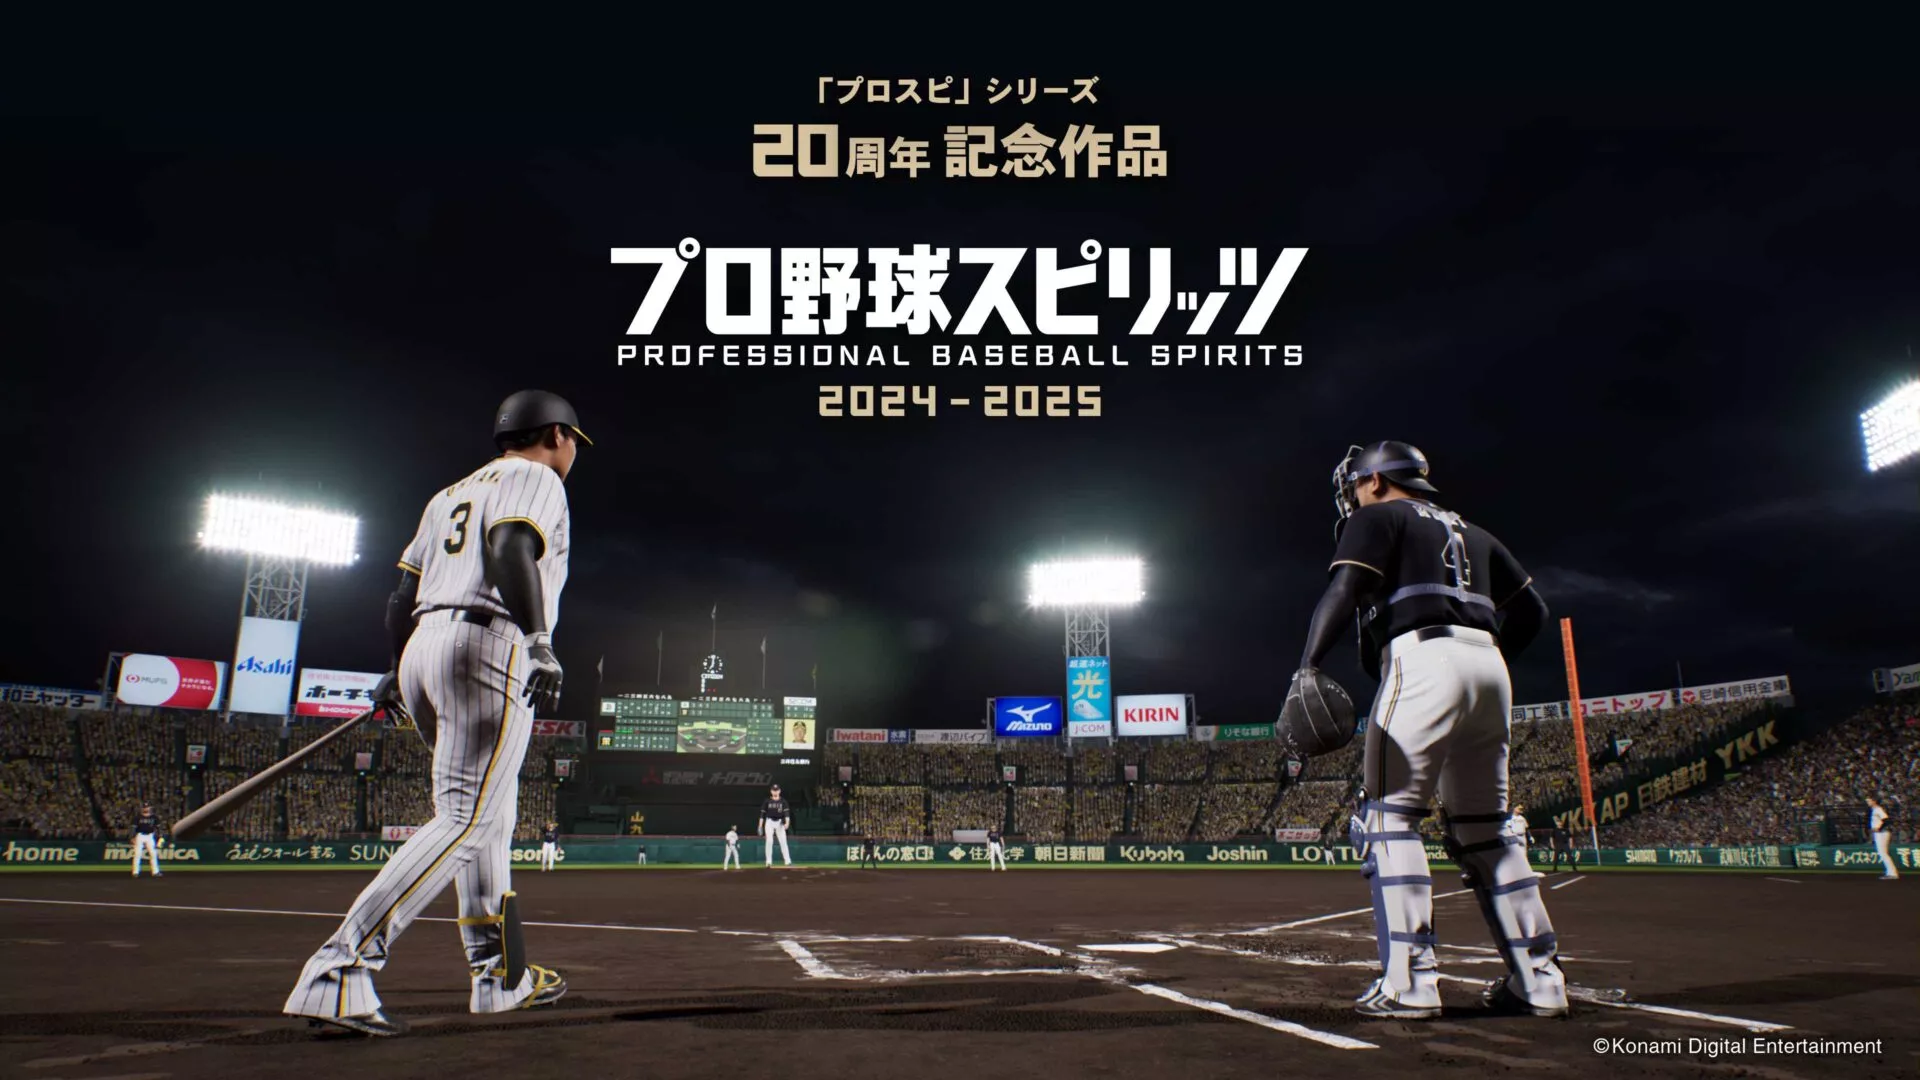 Professional Baseball Spirits 2024-2025 für PlayStation 5 und PC angekündigt Heropic